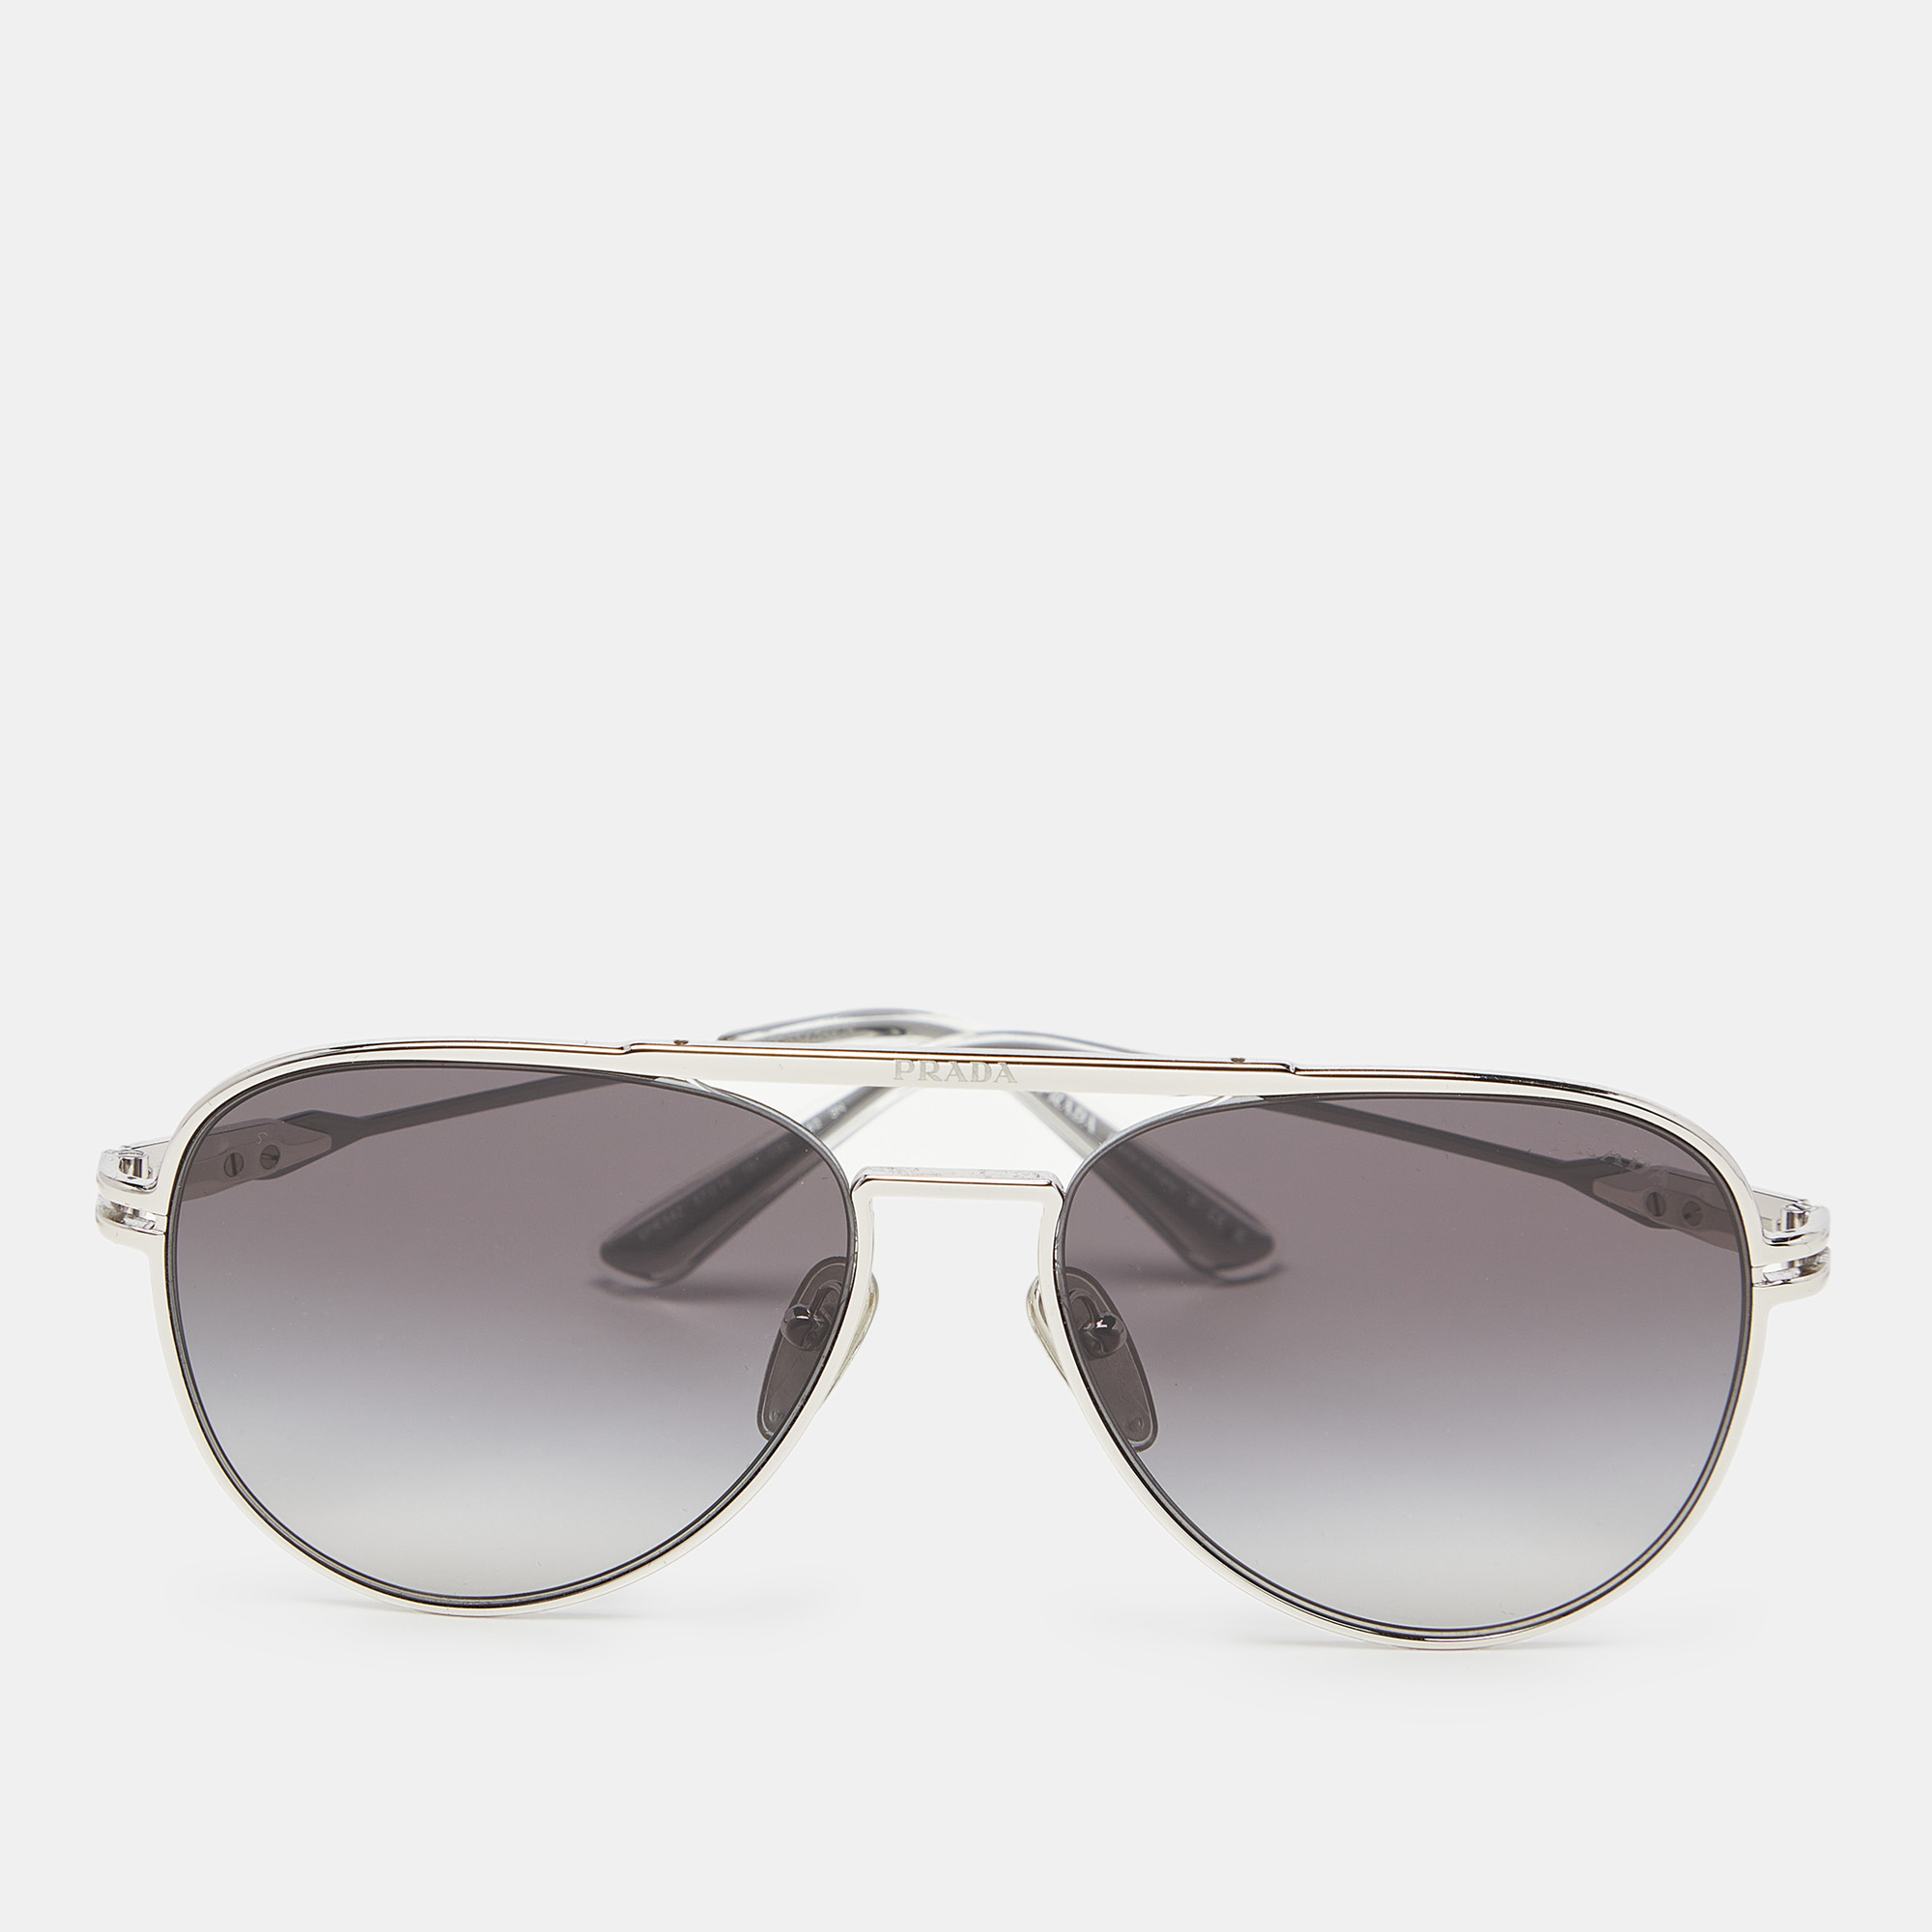 Prada silver tone/grey gradient spr54z aviator sunglasses